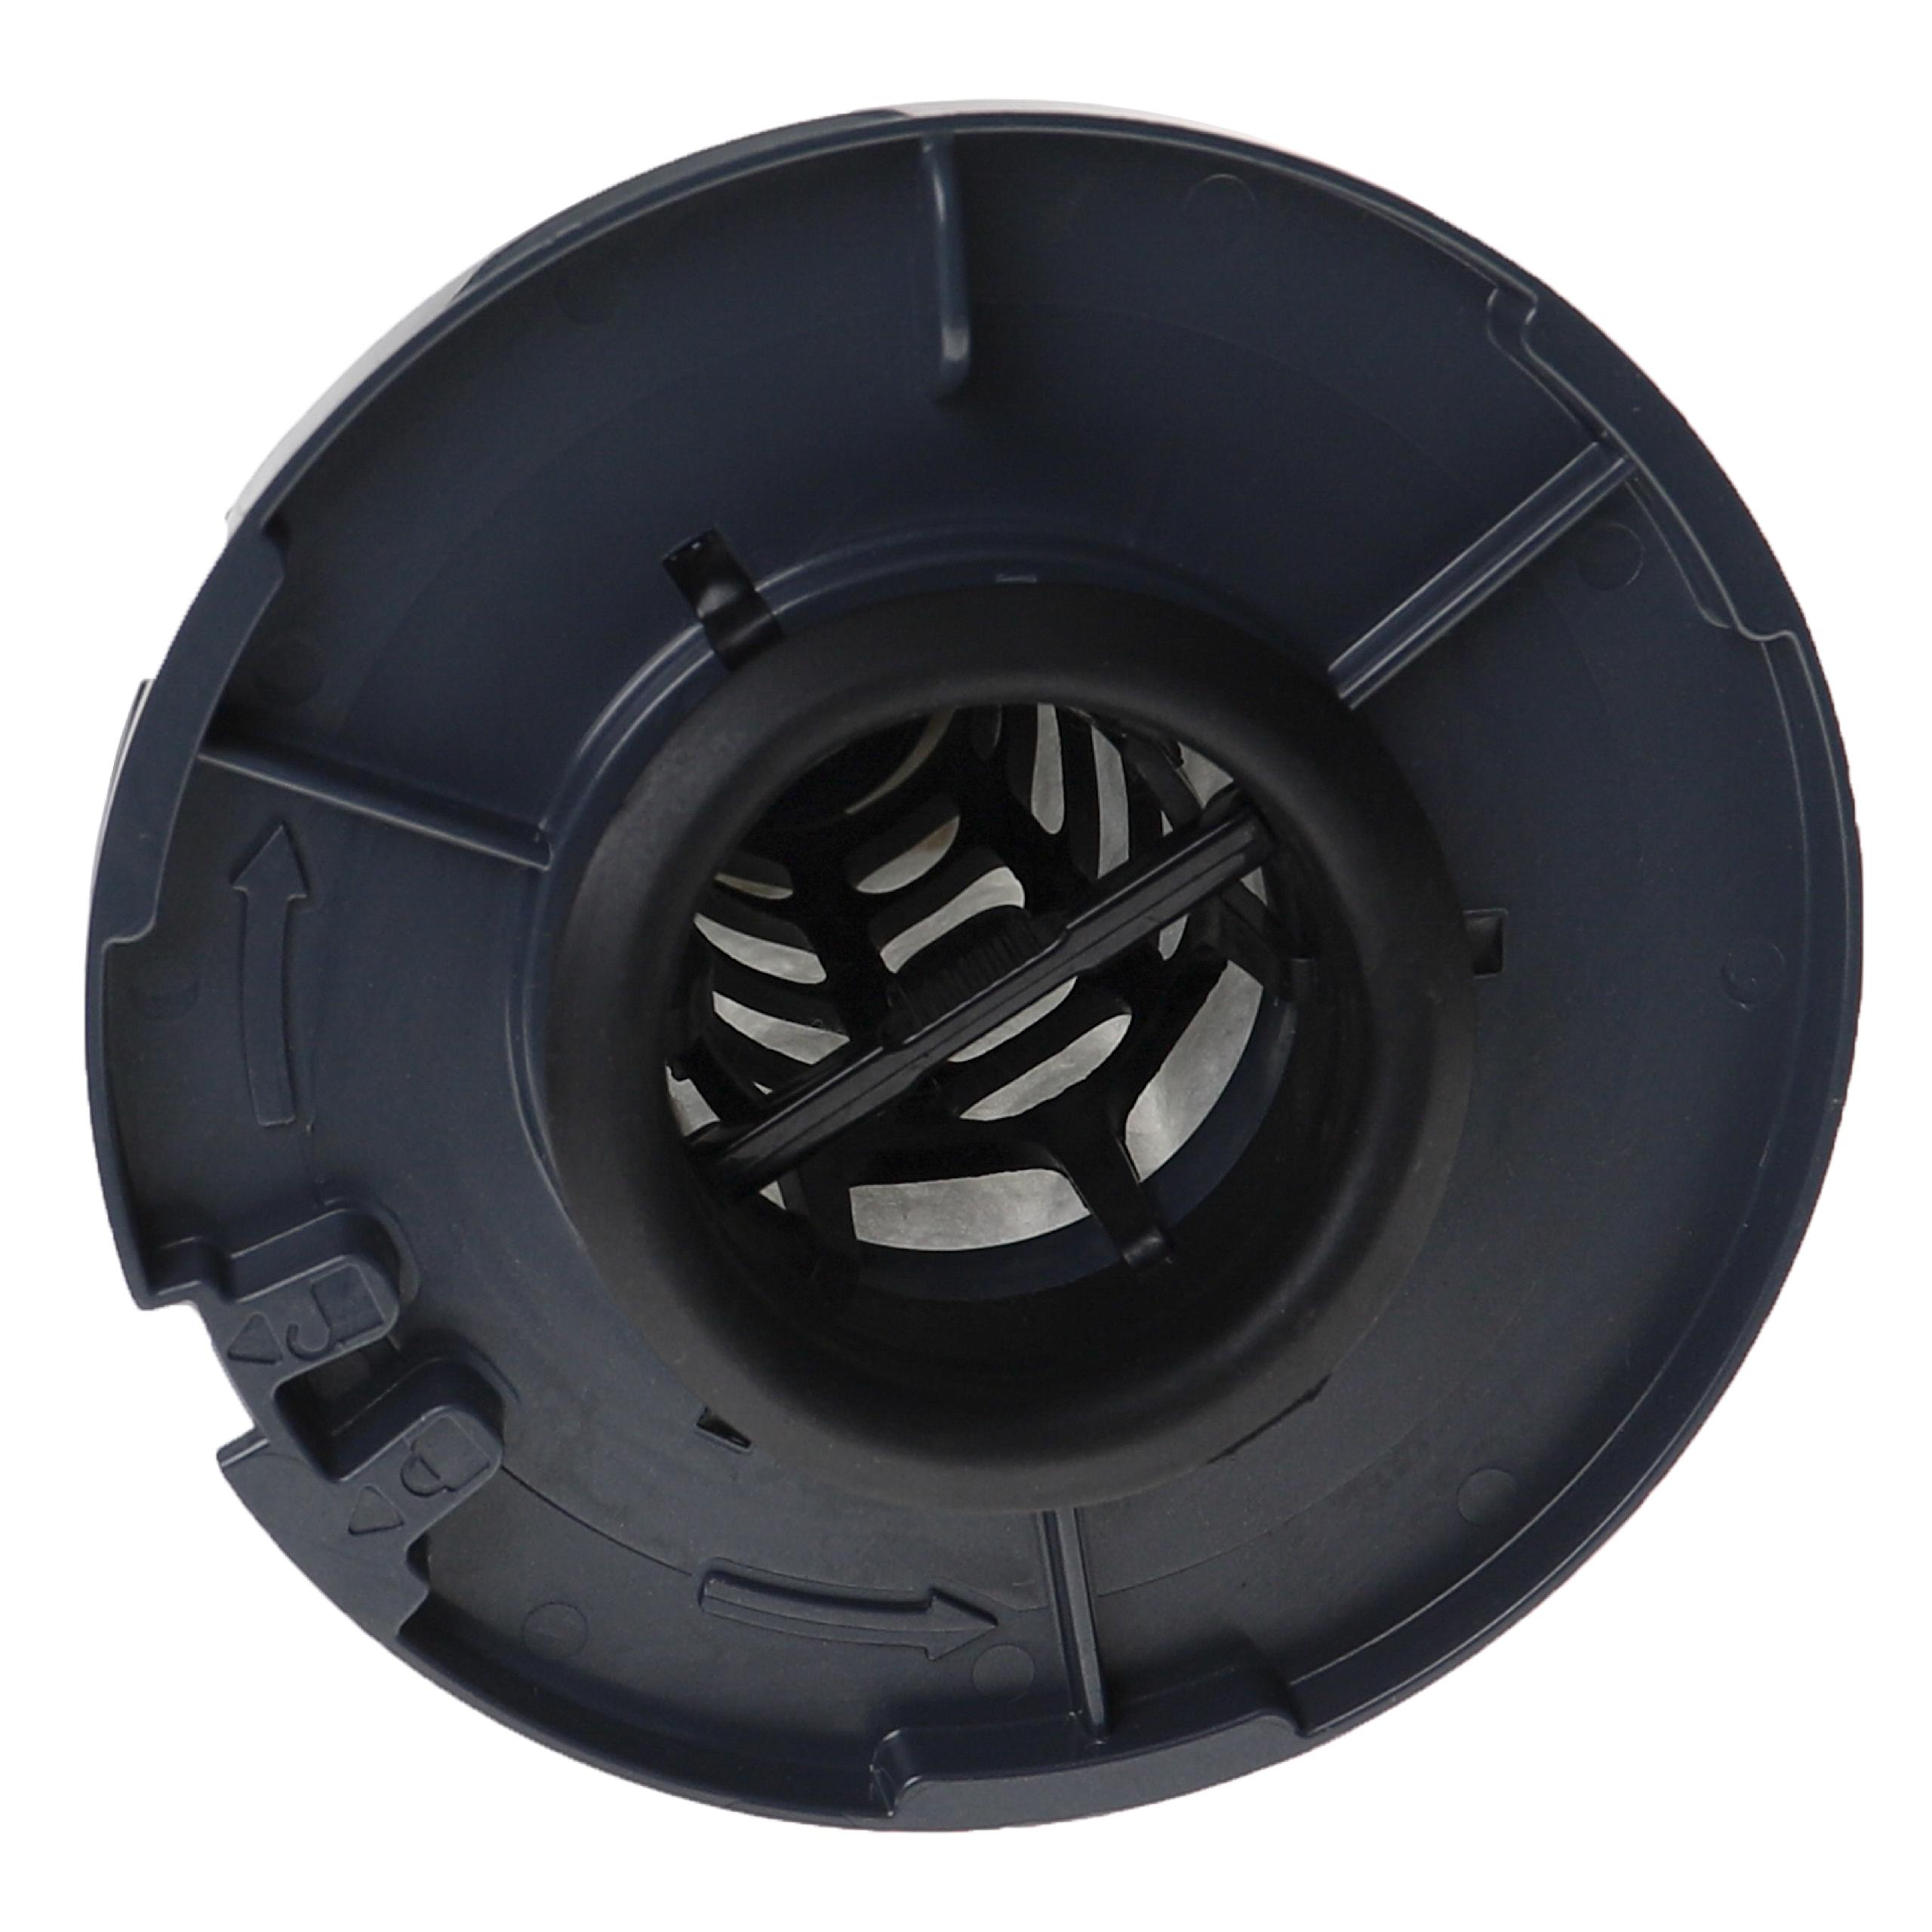 3x separator filter replaces Rowenta ZR009007 for Rowenta Vacuum Cleaner